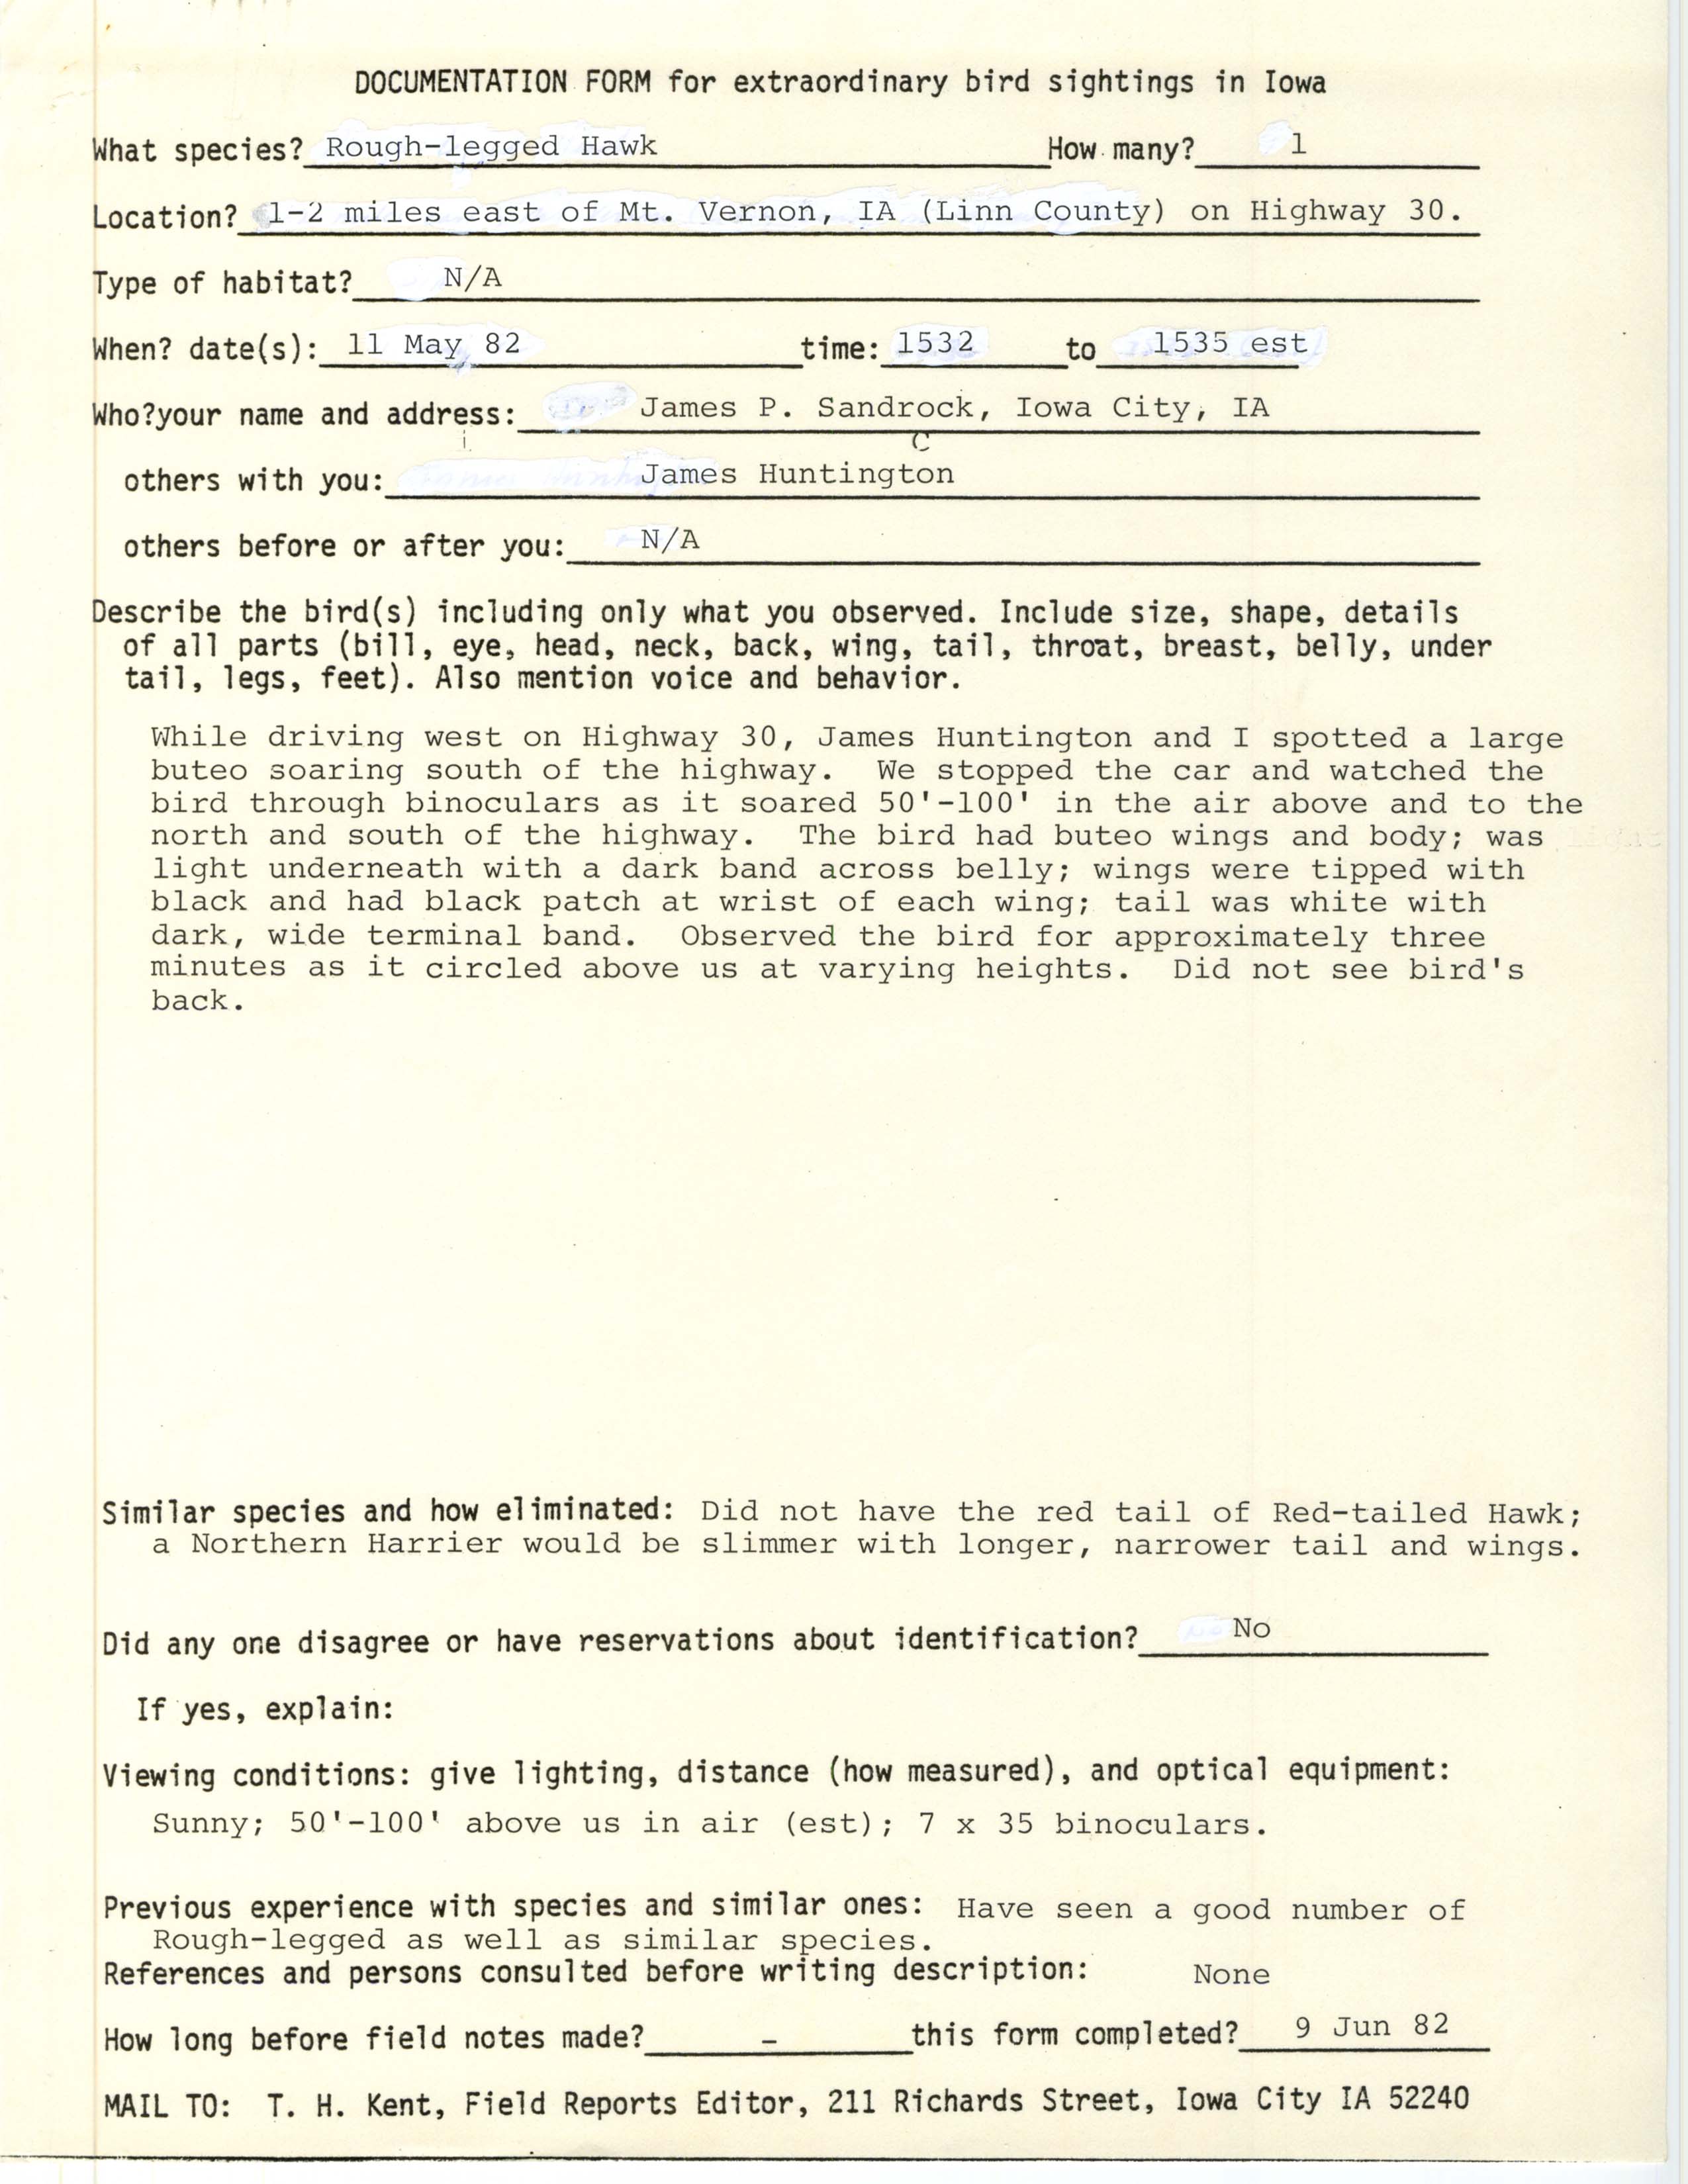 Rare bird documentation form for Rough-legged Hawk east of Mount Vernon, 1982